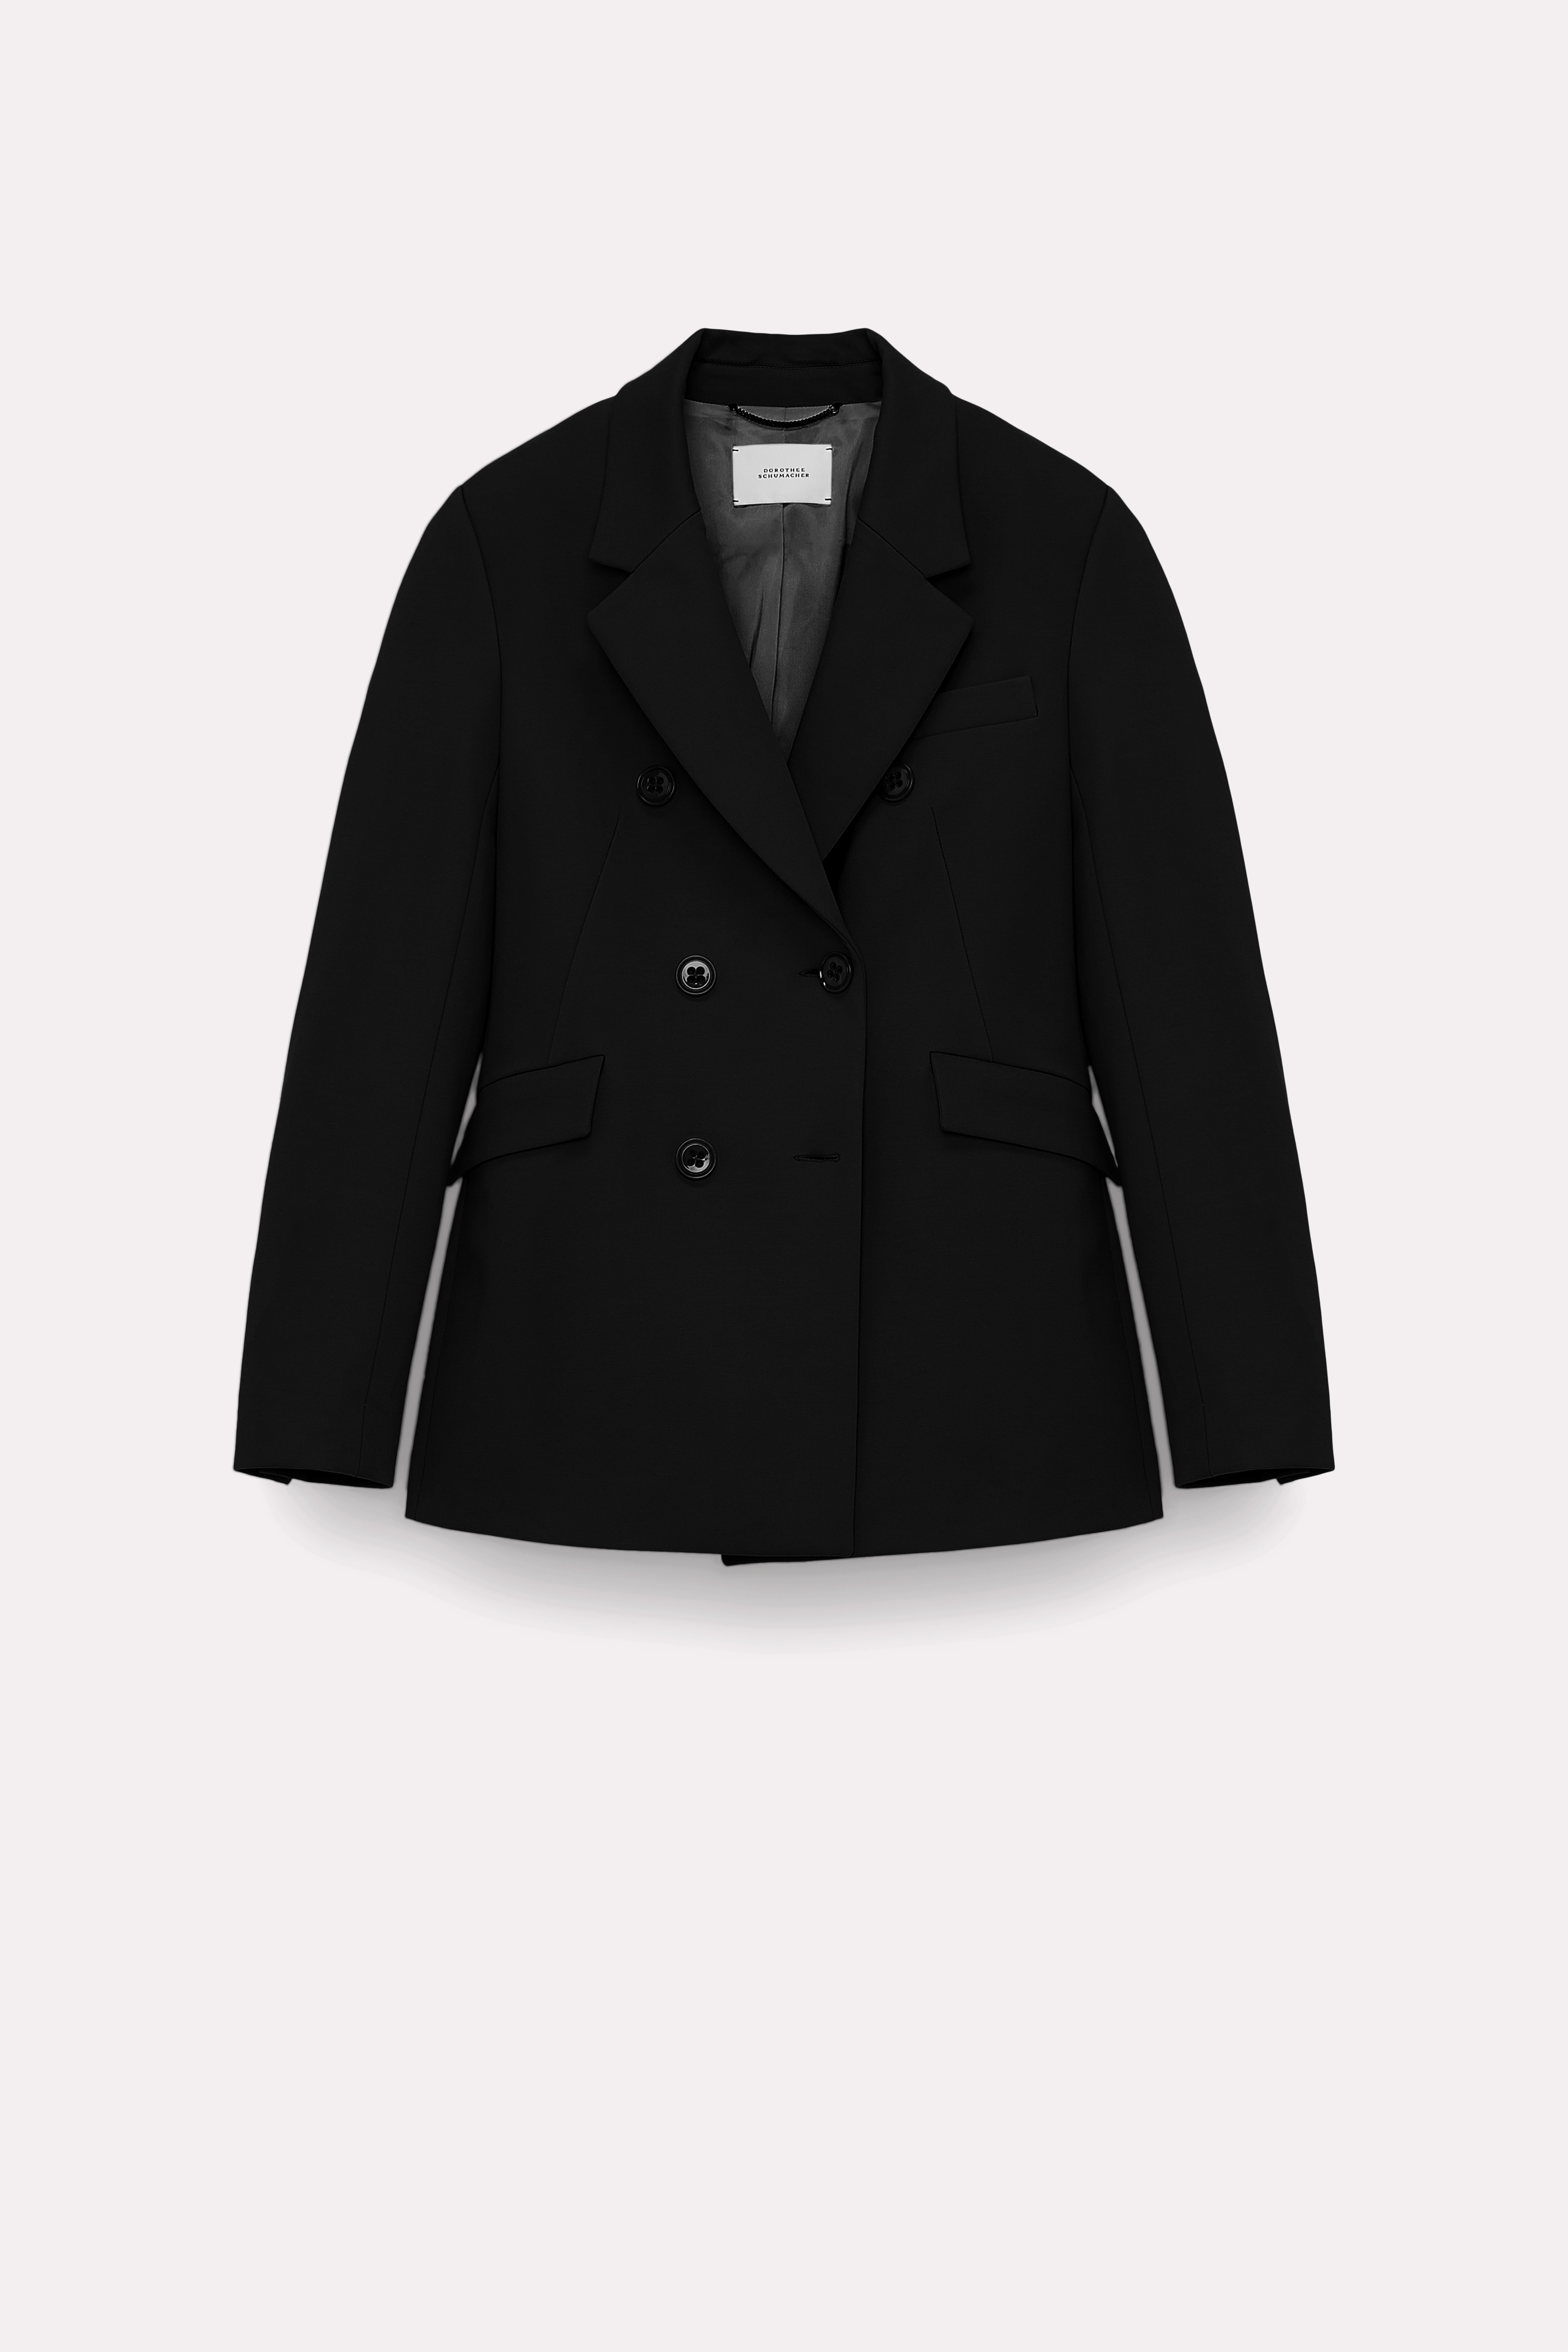 BLAZER IN PUNTO MILANO blazer on sale 2022 2